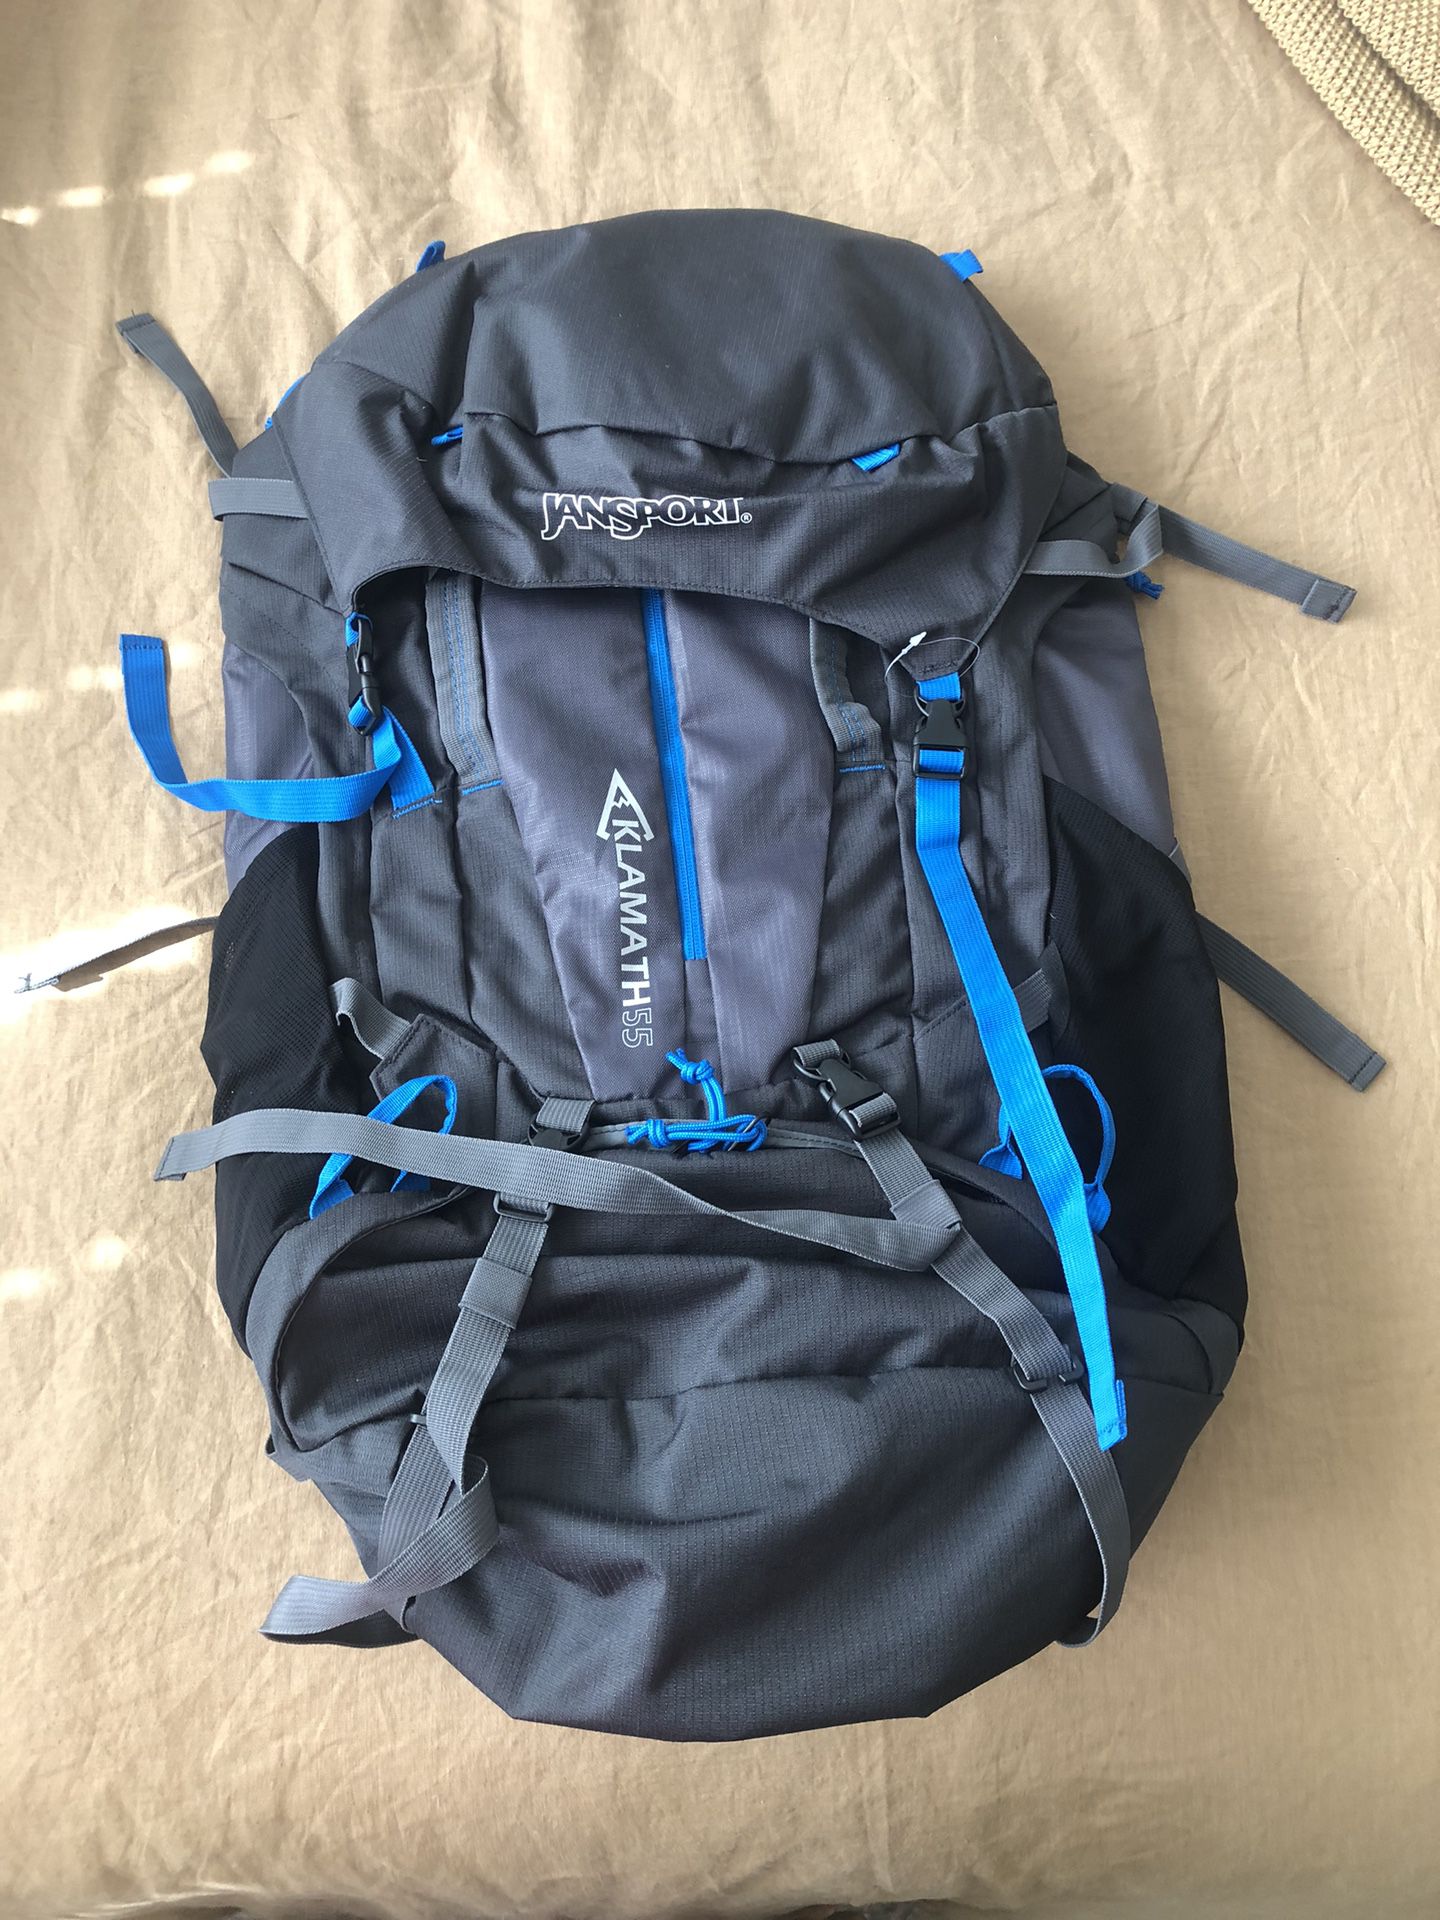 NEW JanSport Klamath 55 - Camping/Hiking backpack